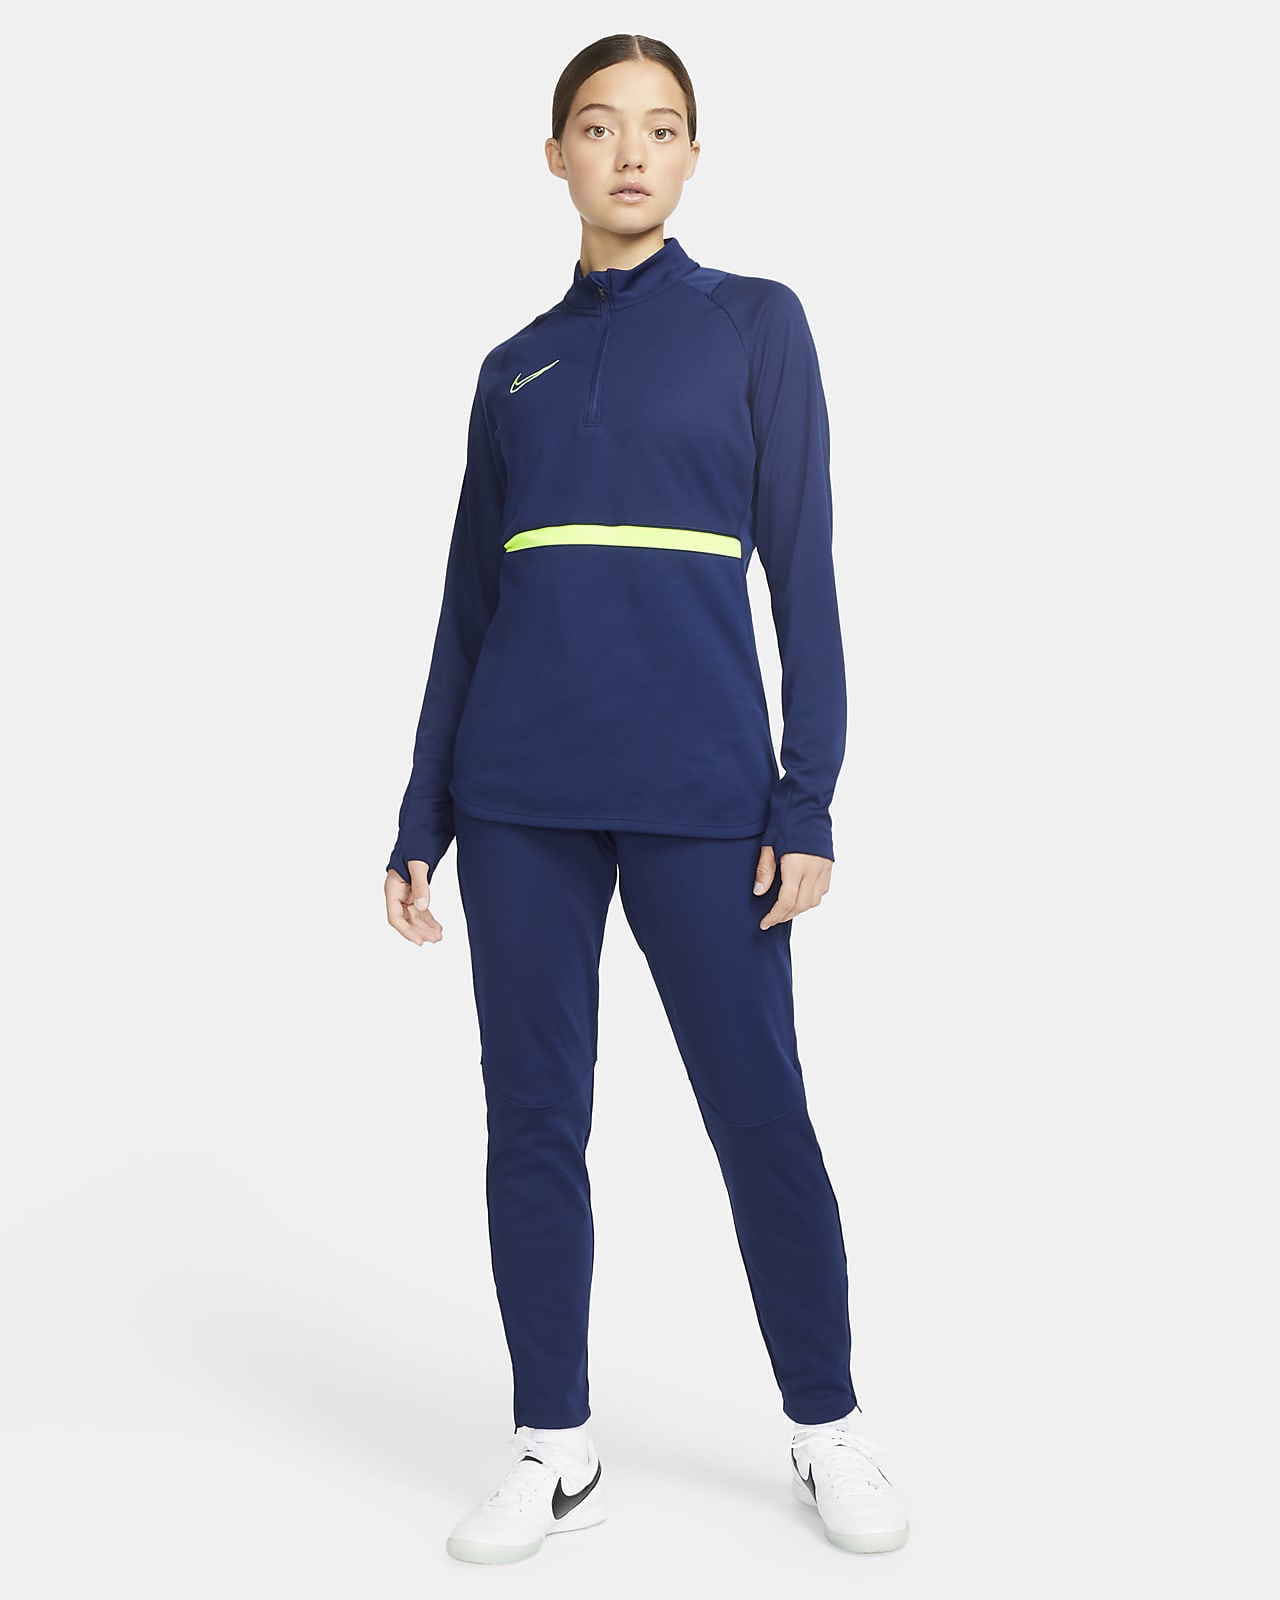 Nike Dri-Fit Women's Blue Soccer Jersey Size Medium 893965-480